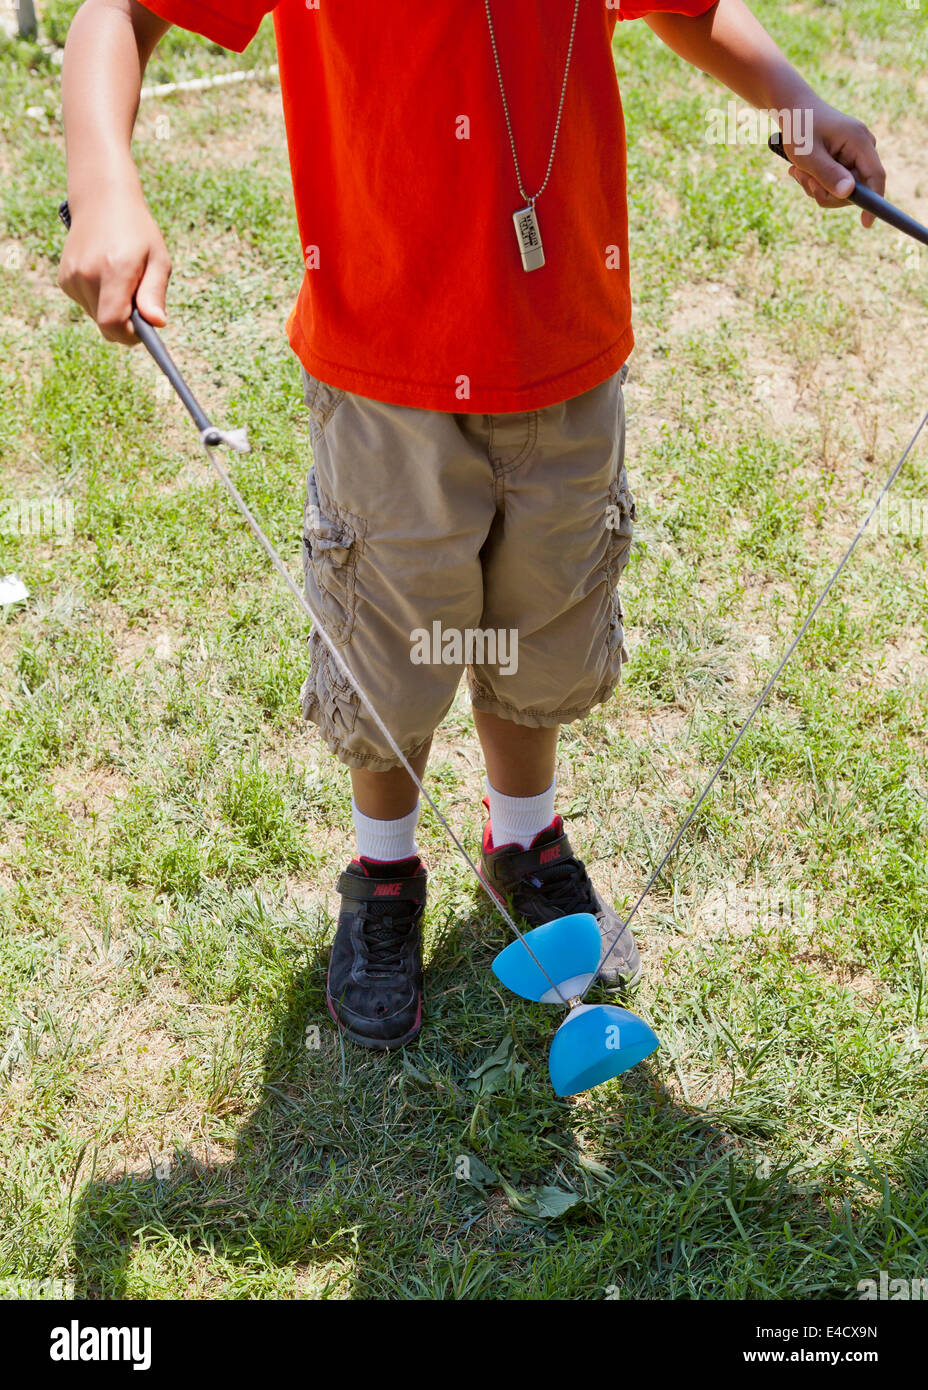 Kind spielt mit Diabolo jonglieren Spielzeug - USA Stockfoto